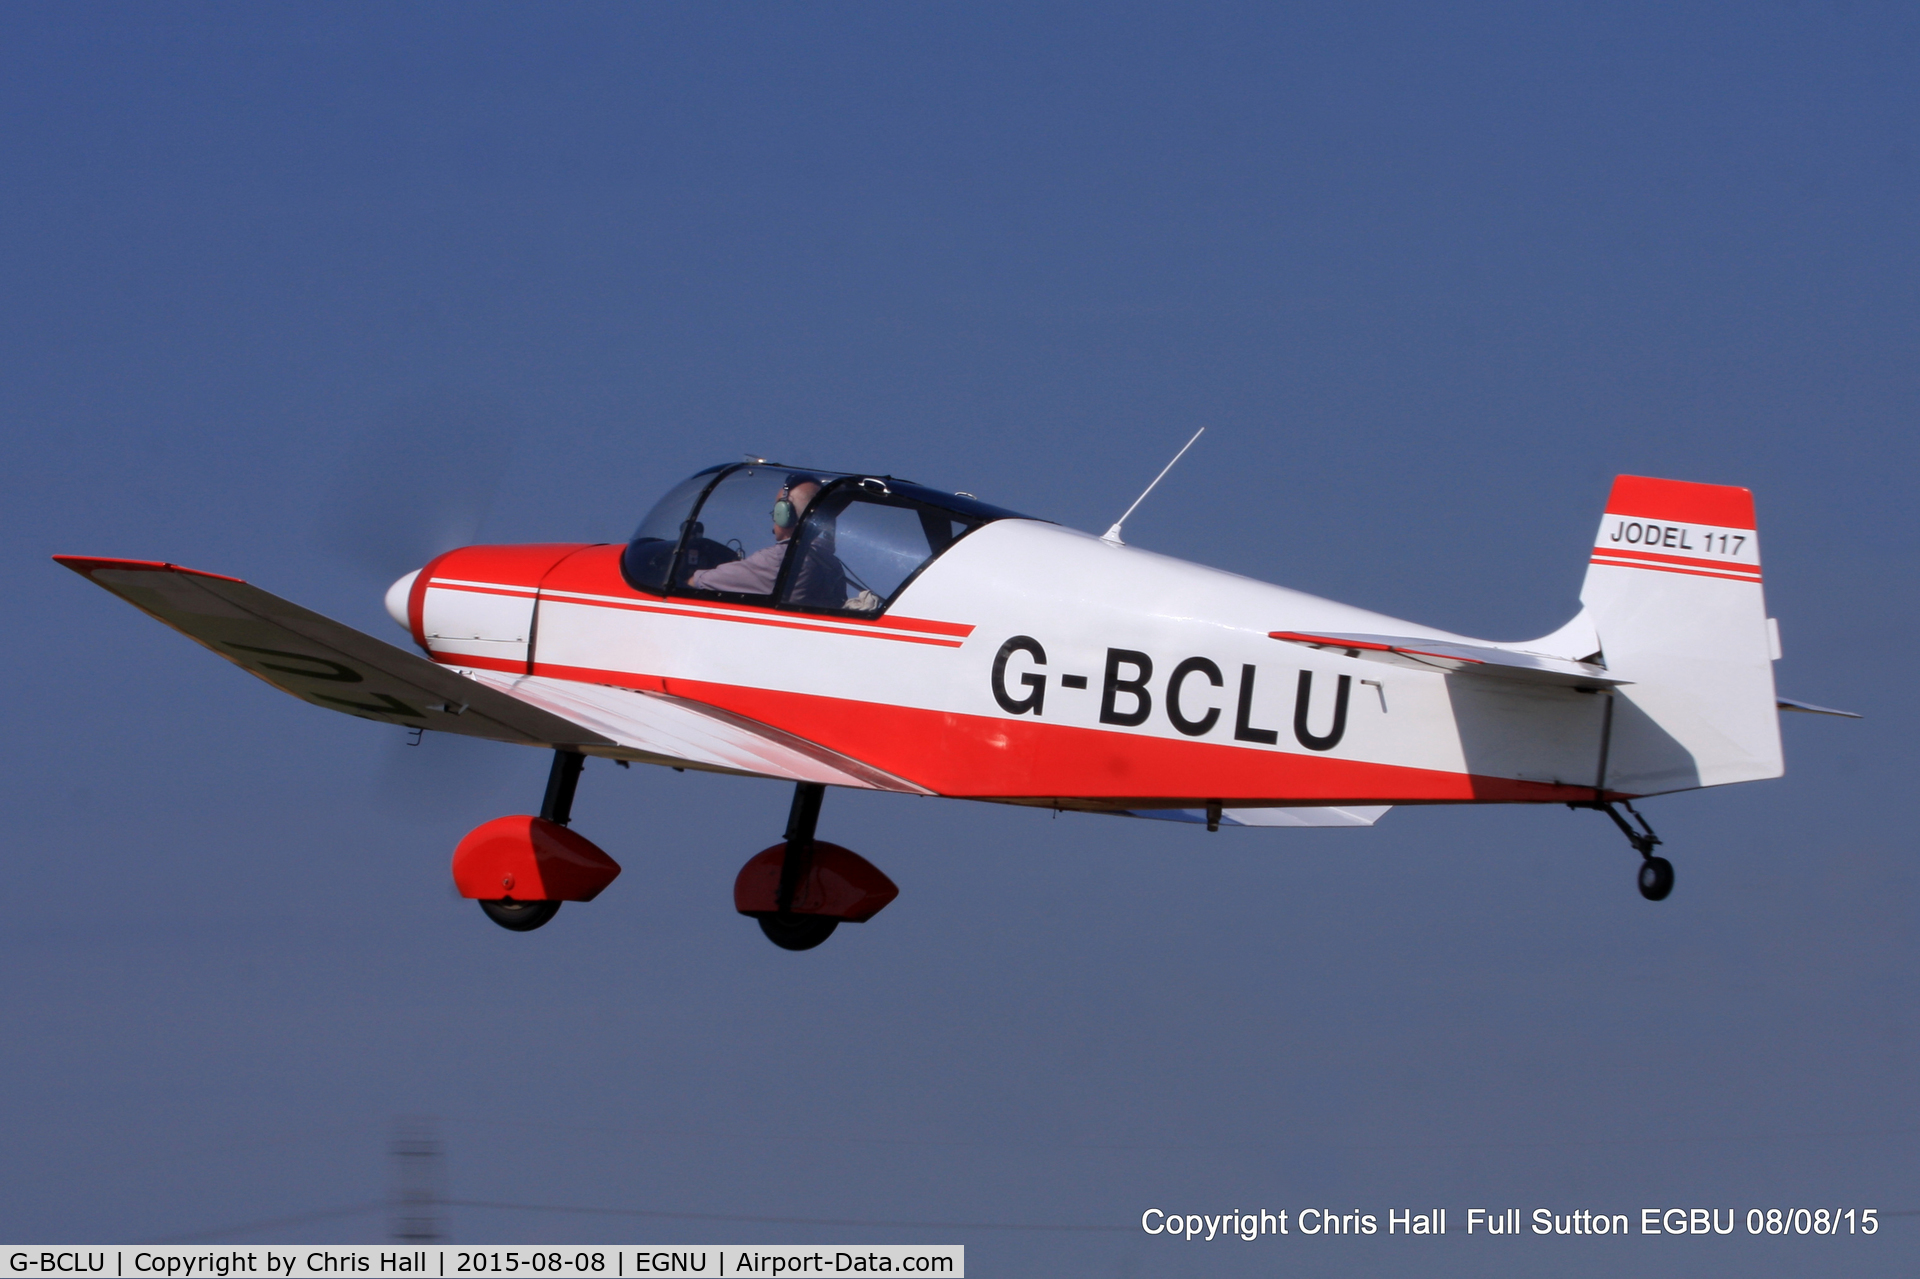 G-BCLU, 1957 SAN Jodel D-117 C/N 506, at the Vale of York LAA strut flyin, Full Sutton